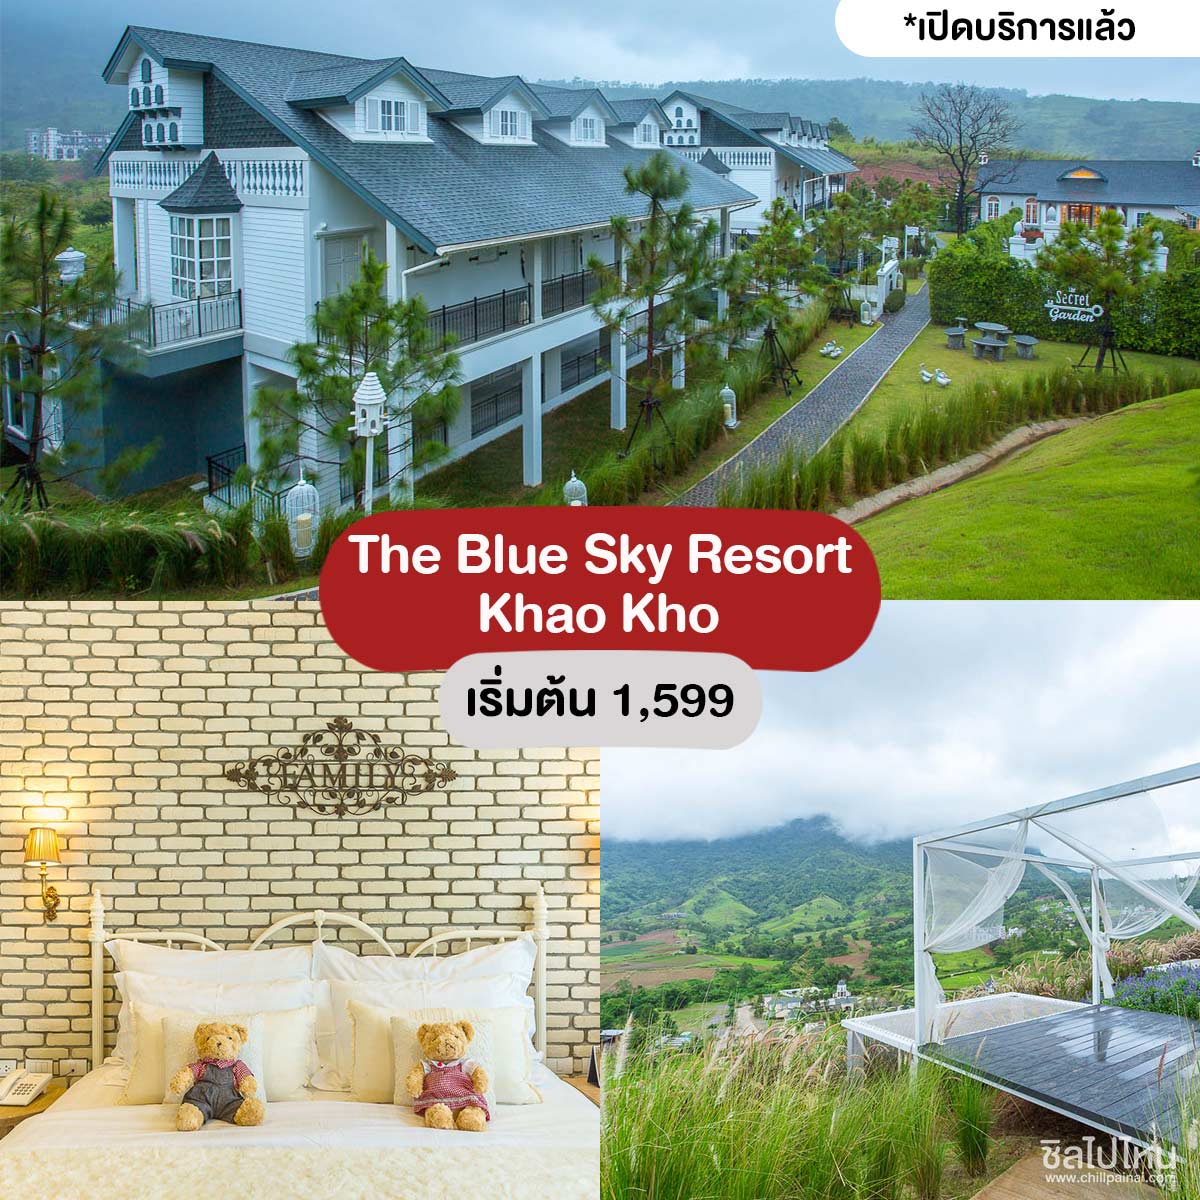 The Blue Sky Resort Khao Kho - ที่พักเขาค้อ 